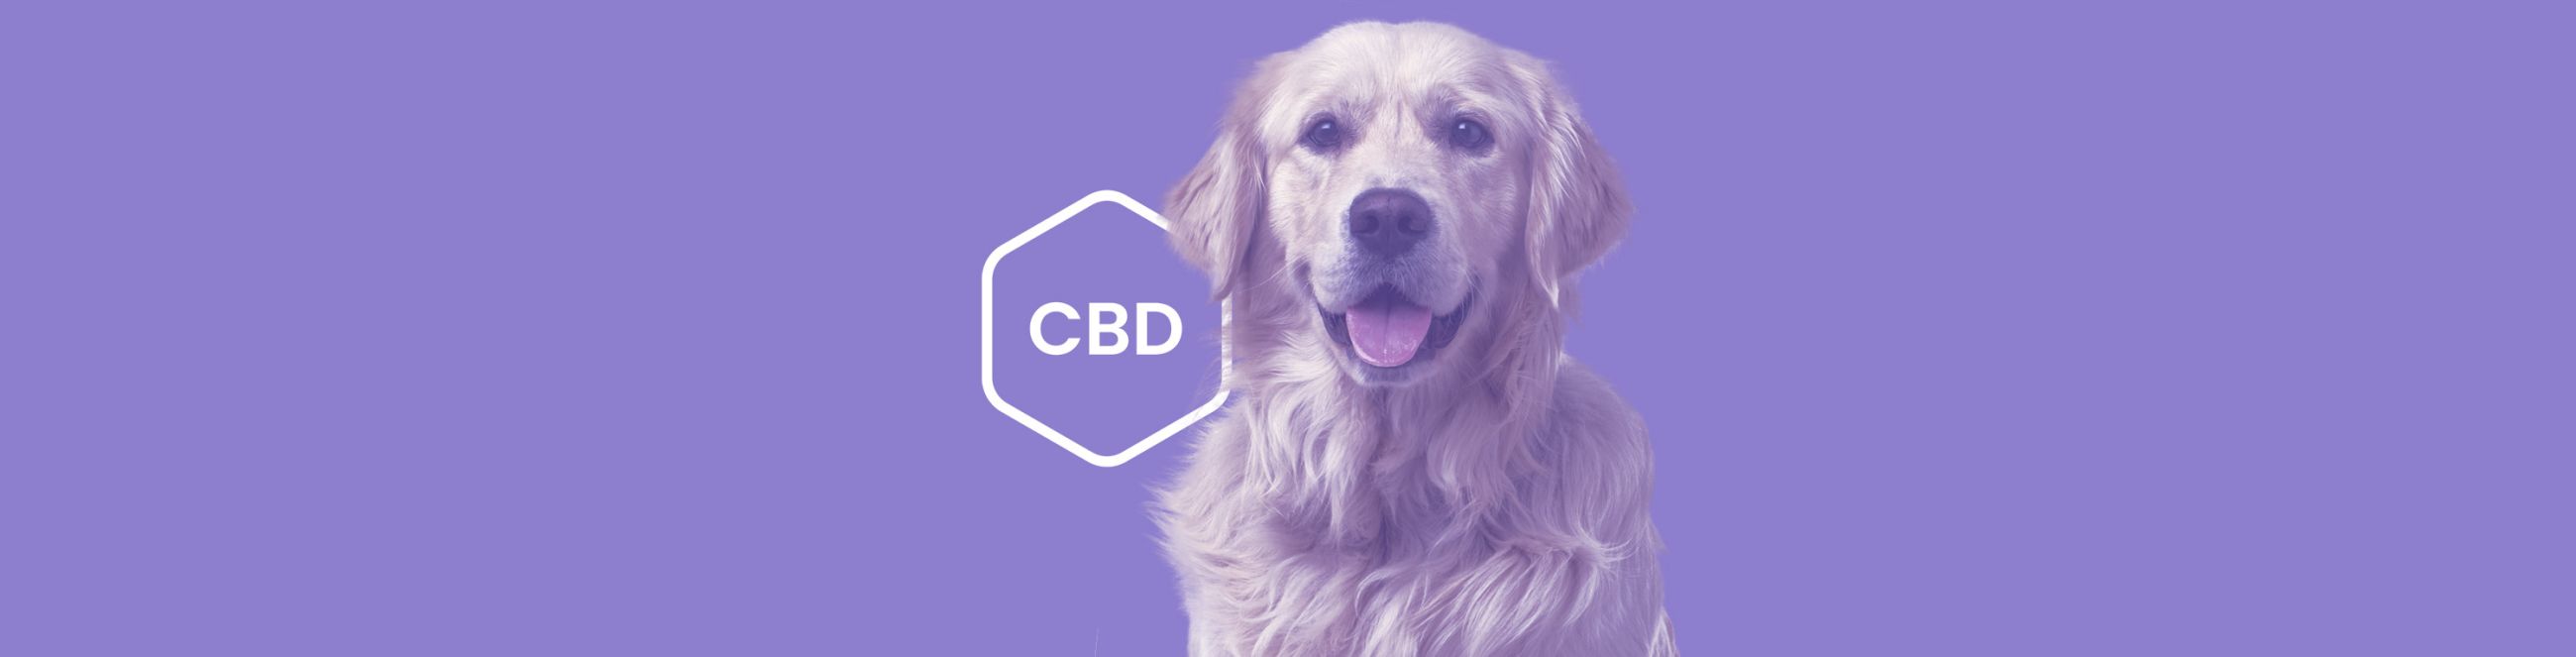 CBD dosage for Large Dogs